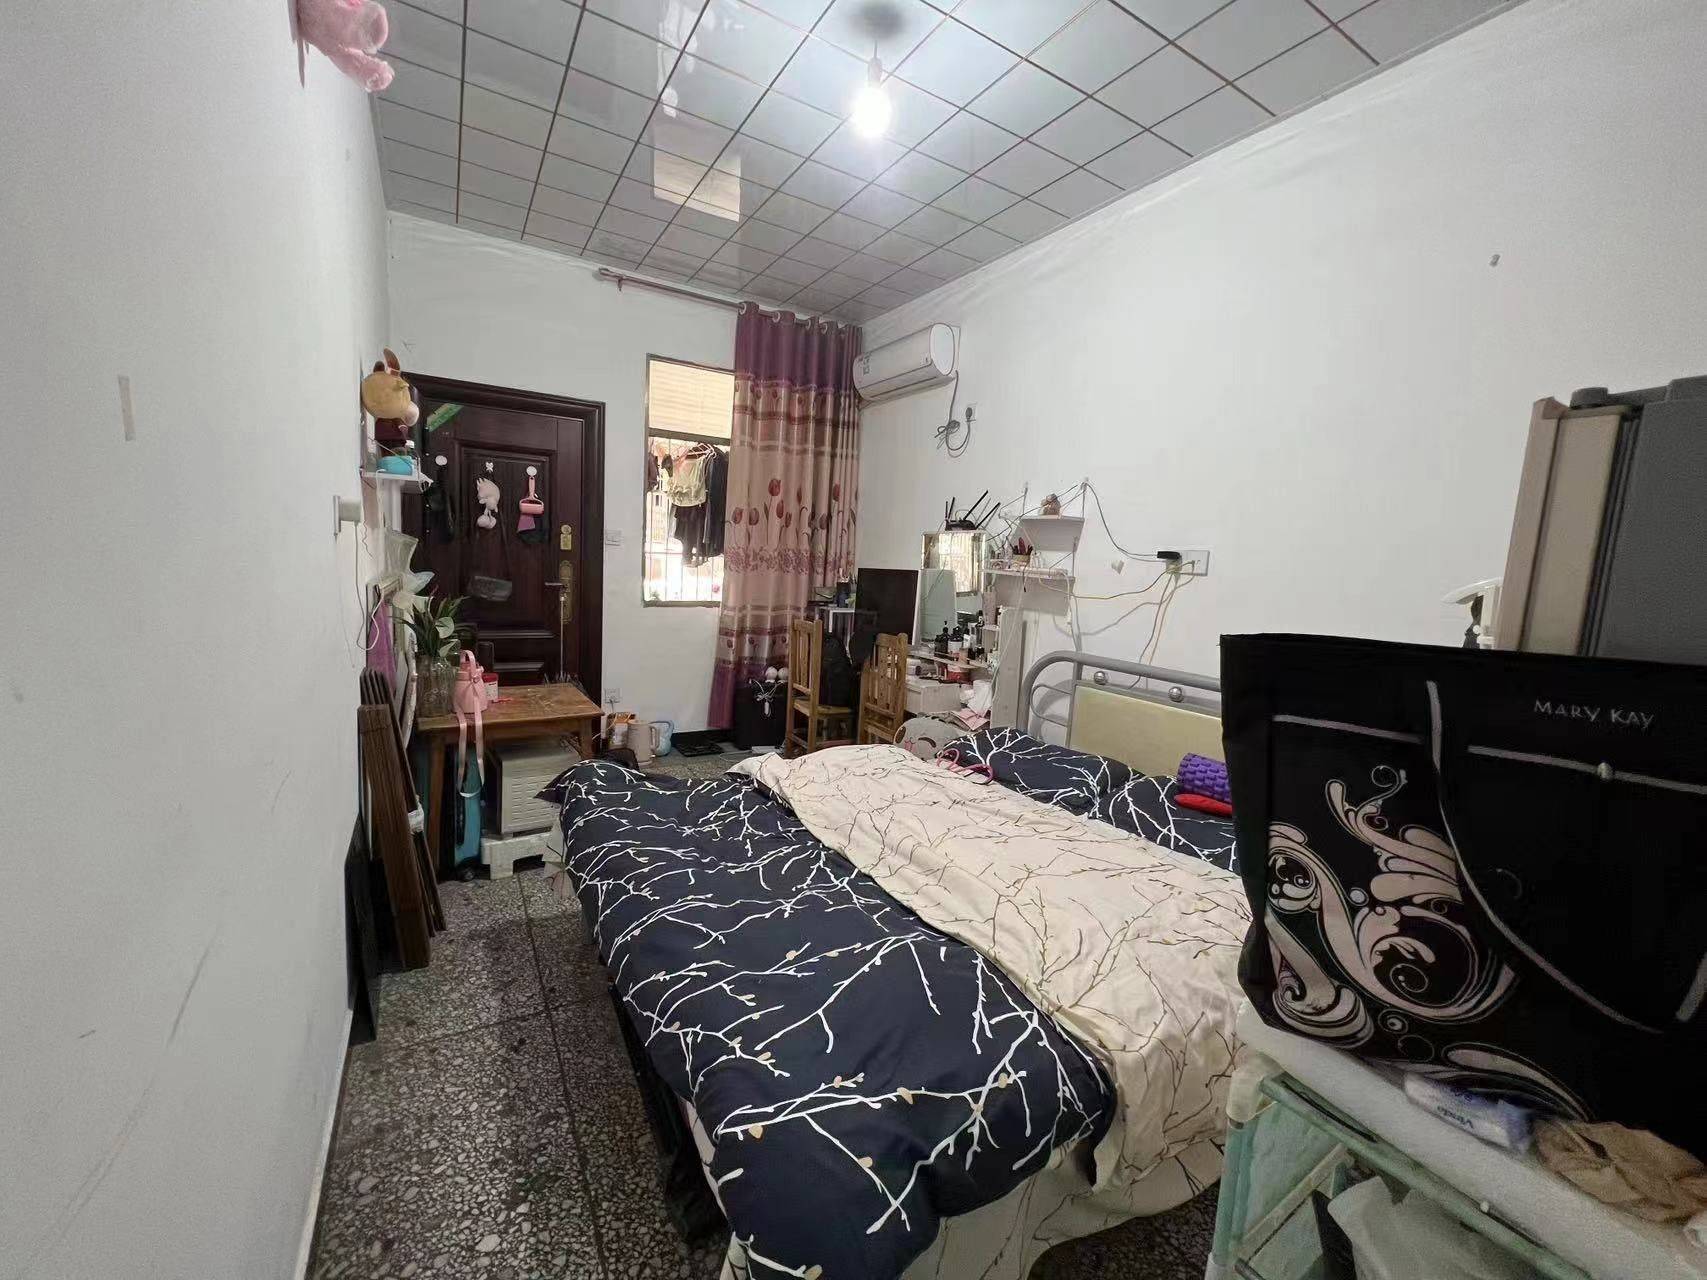 Changsha-Yuelu-Cozy Home,Clean&Comfy,No Gender Limit